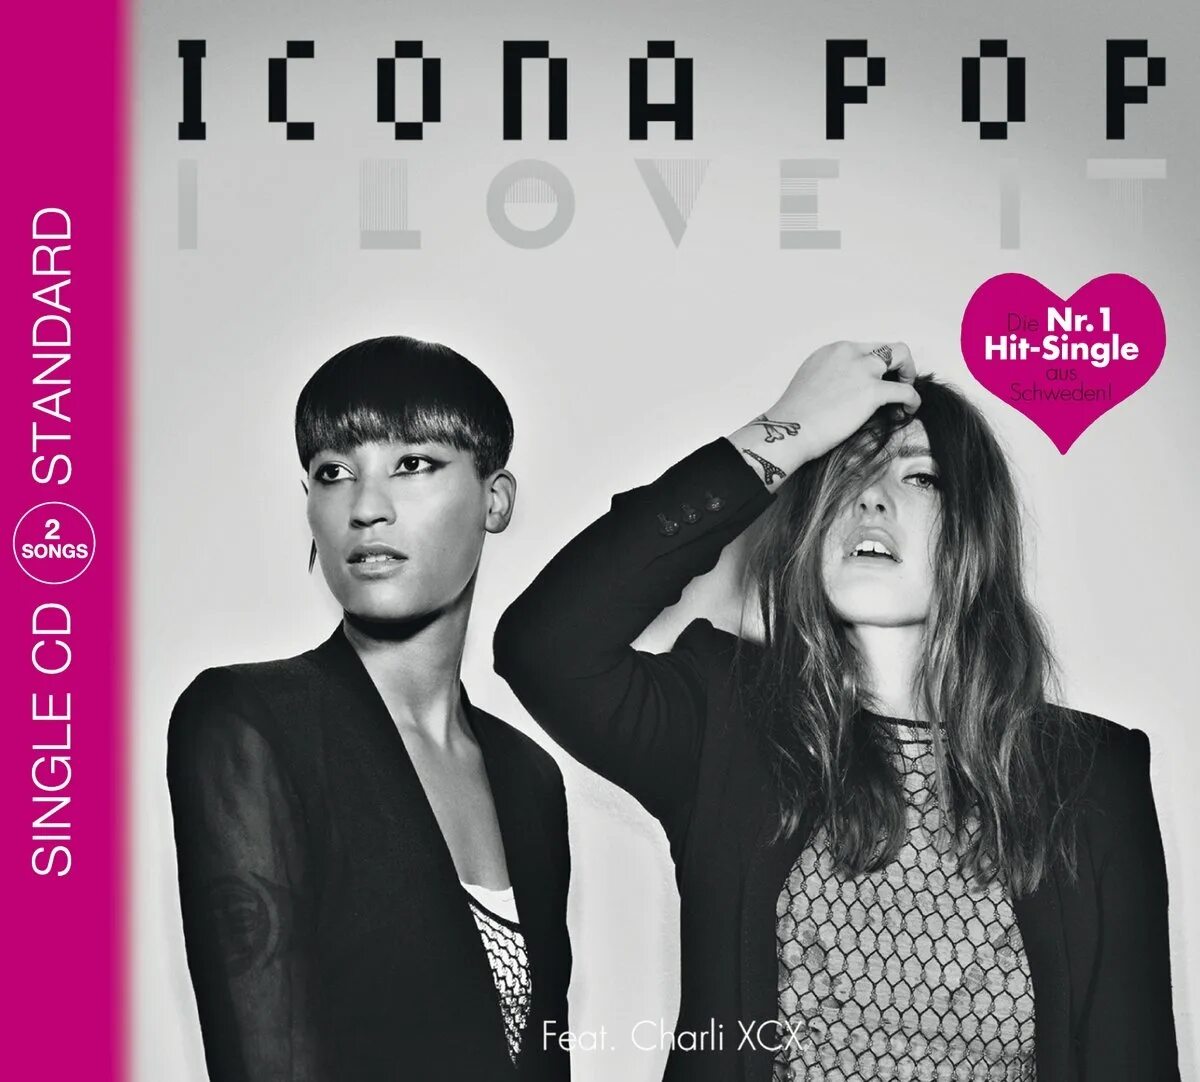 Icona Pop feat. Charli XCX - I Love it (feat. Charli XCX). I Love it icona Pop обложка. Icona Pop & vize.